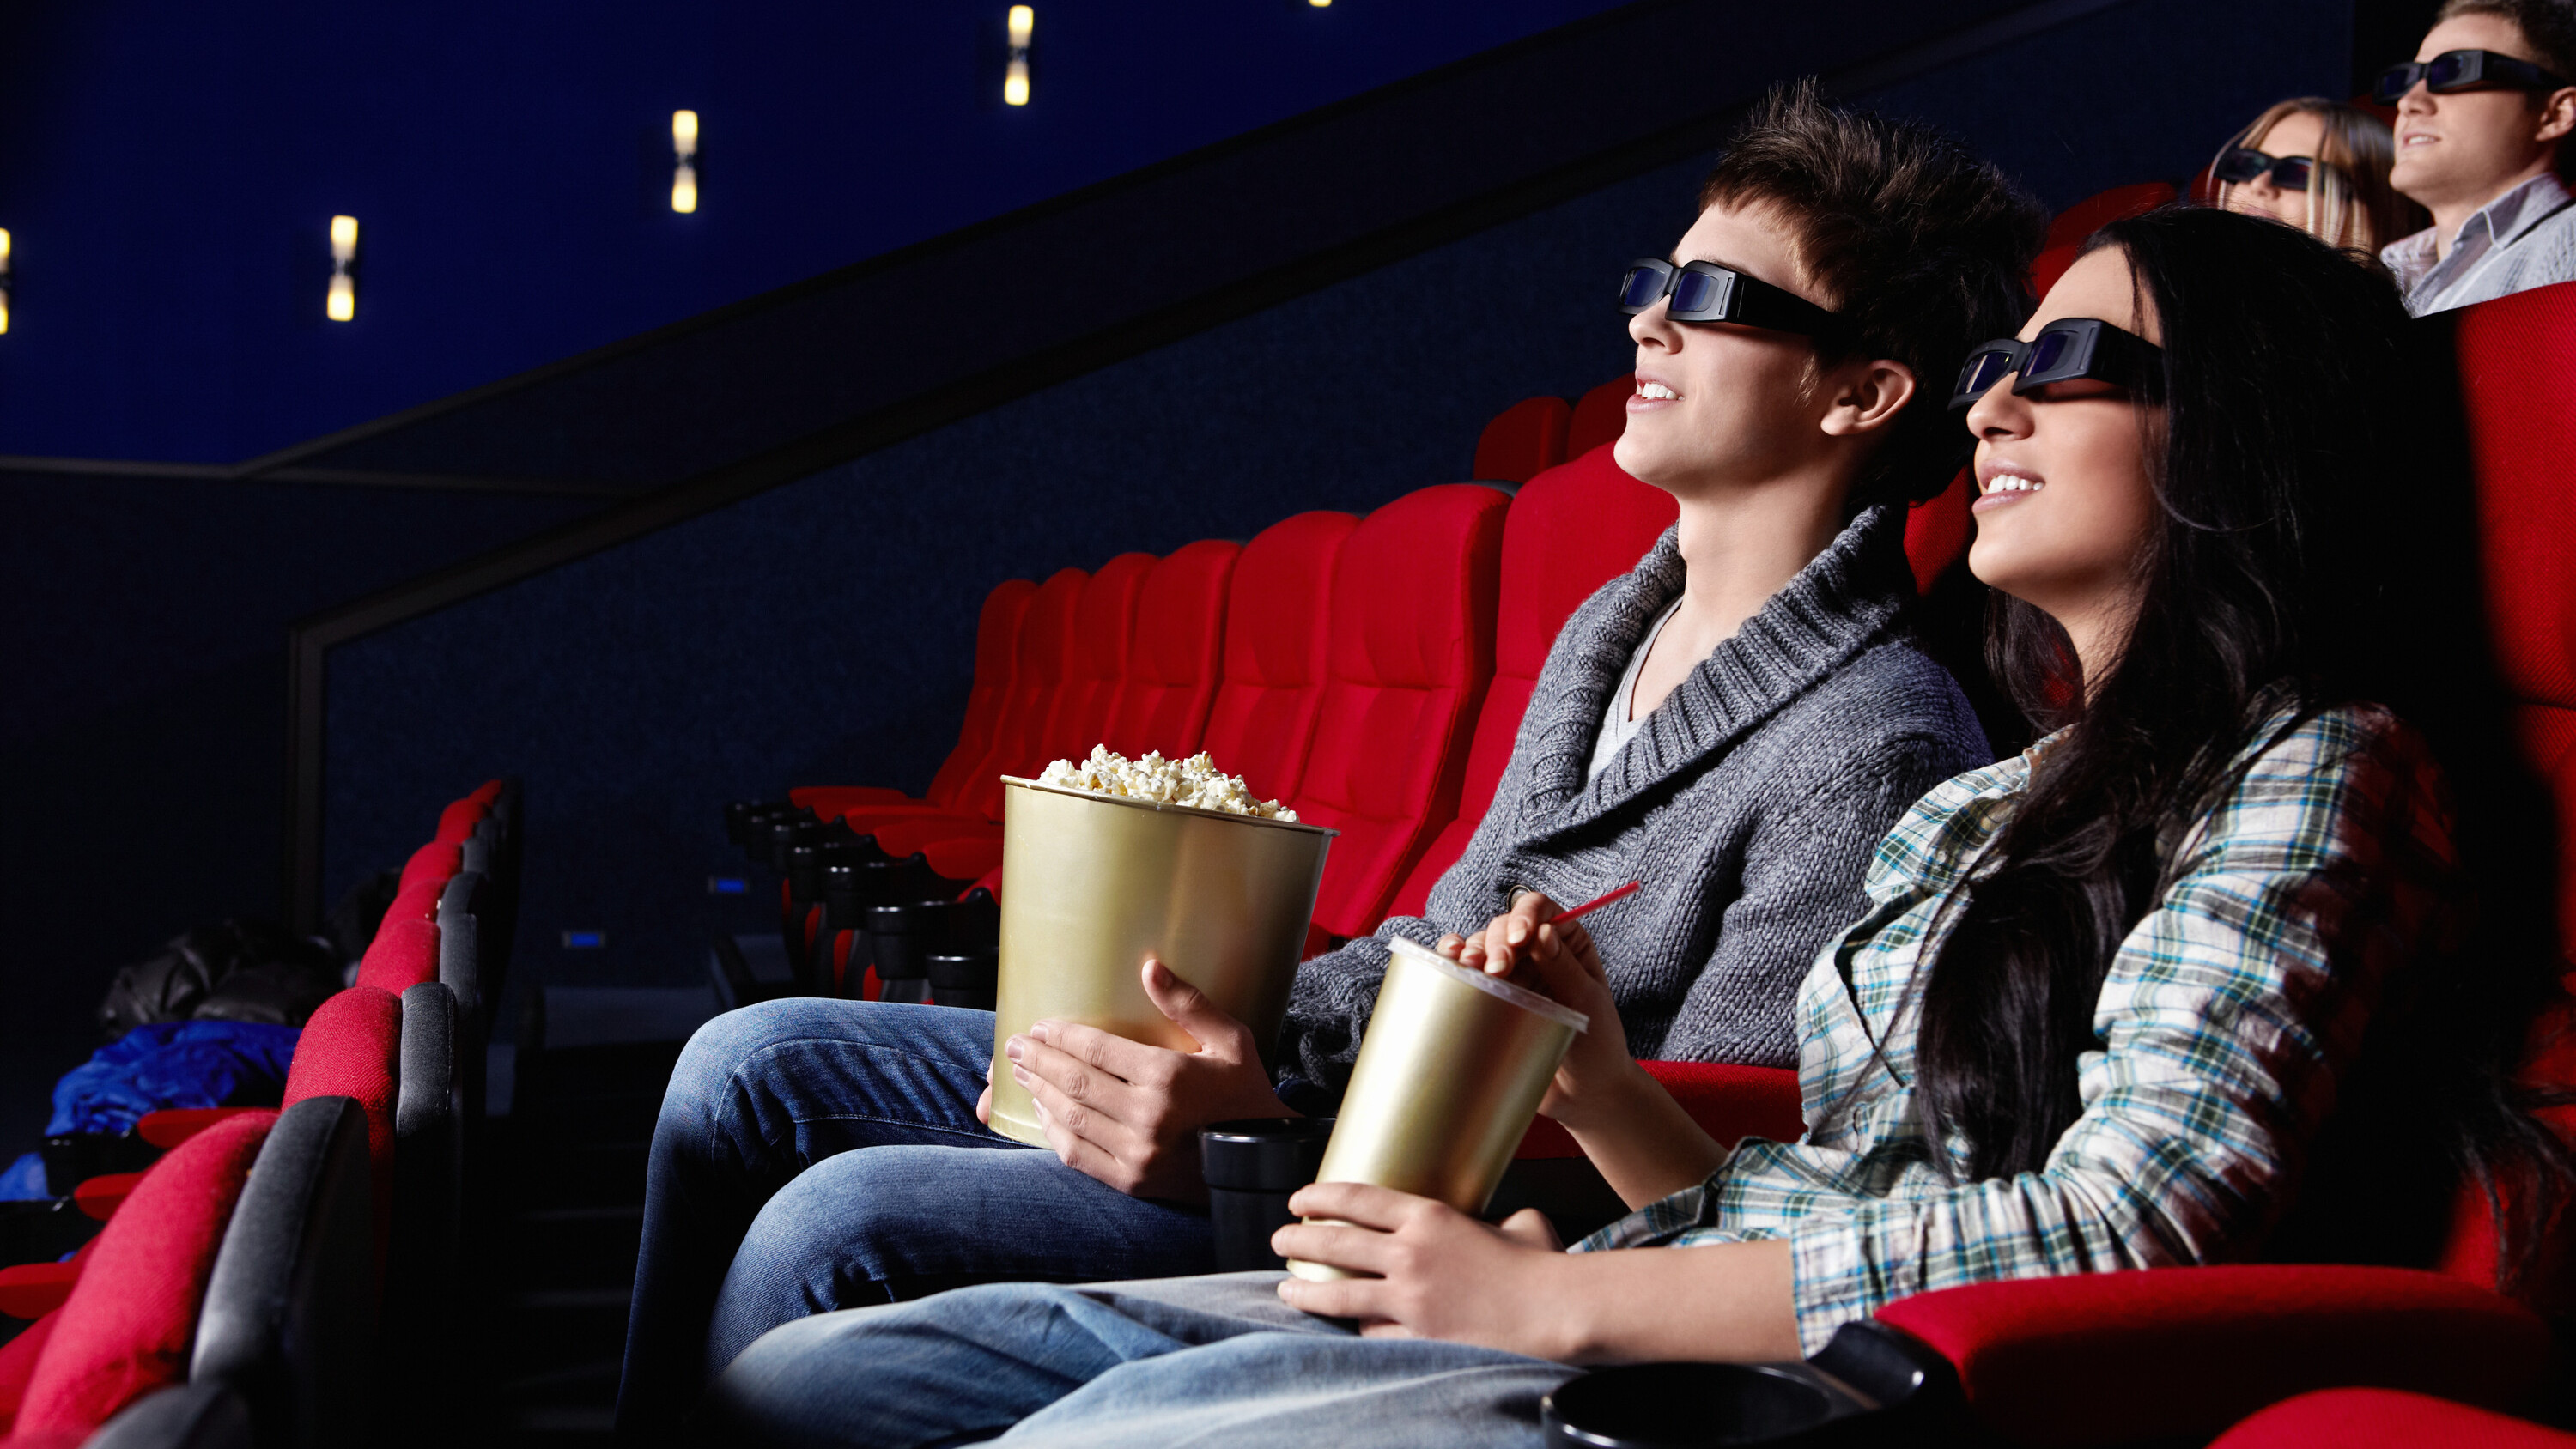 New films in cinema. Люди сидят в кинотеатре. Пара в кинотеатре. Фотосессия в кинотеатре. Парень с девушкой в кинотеатре.